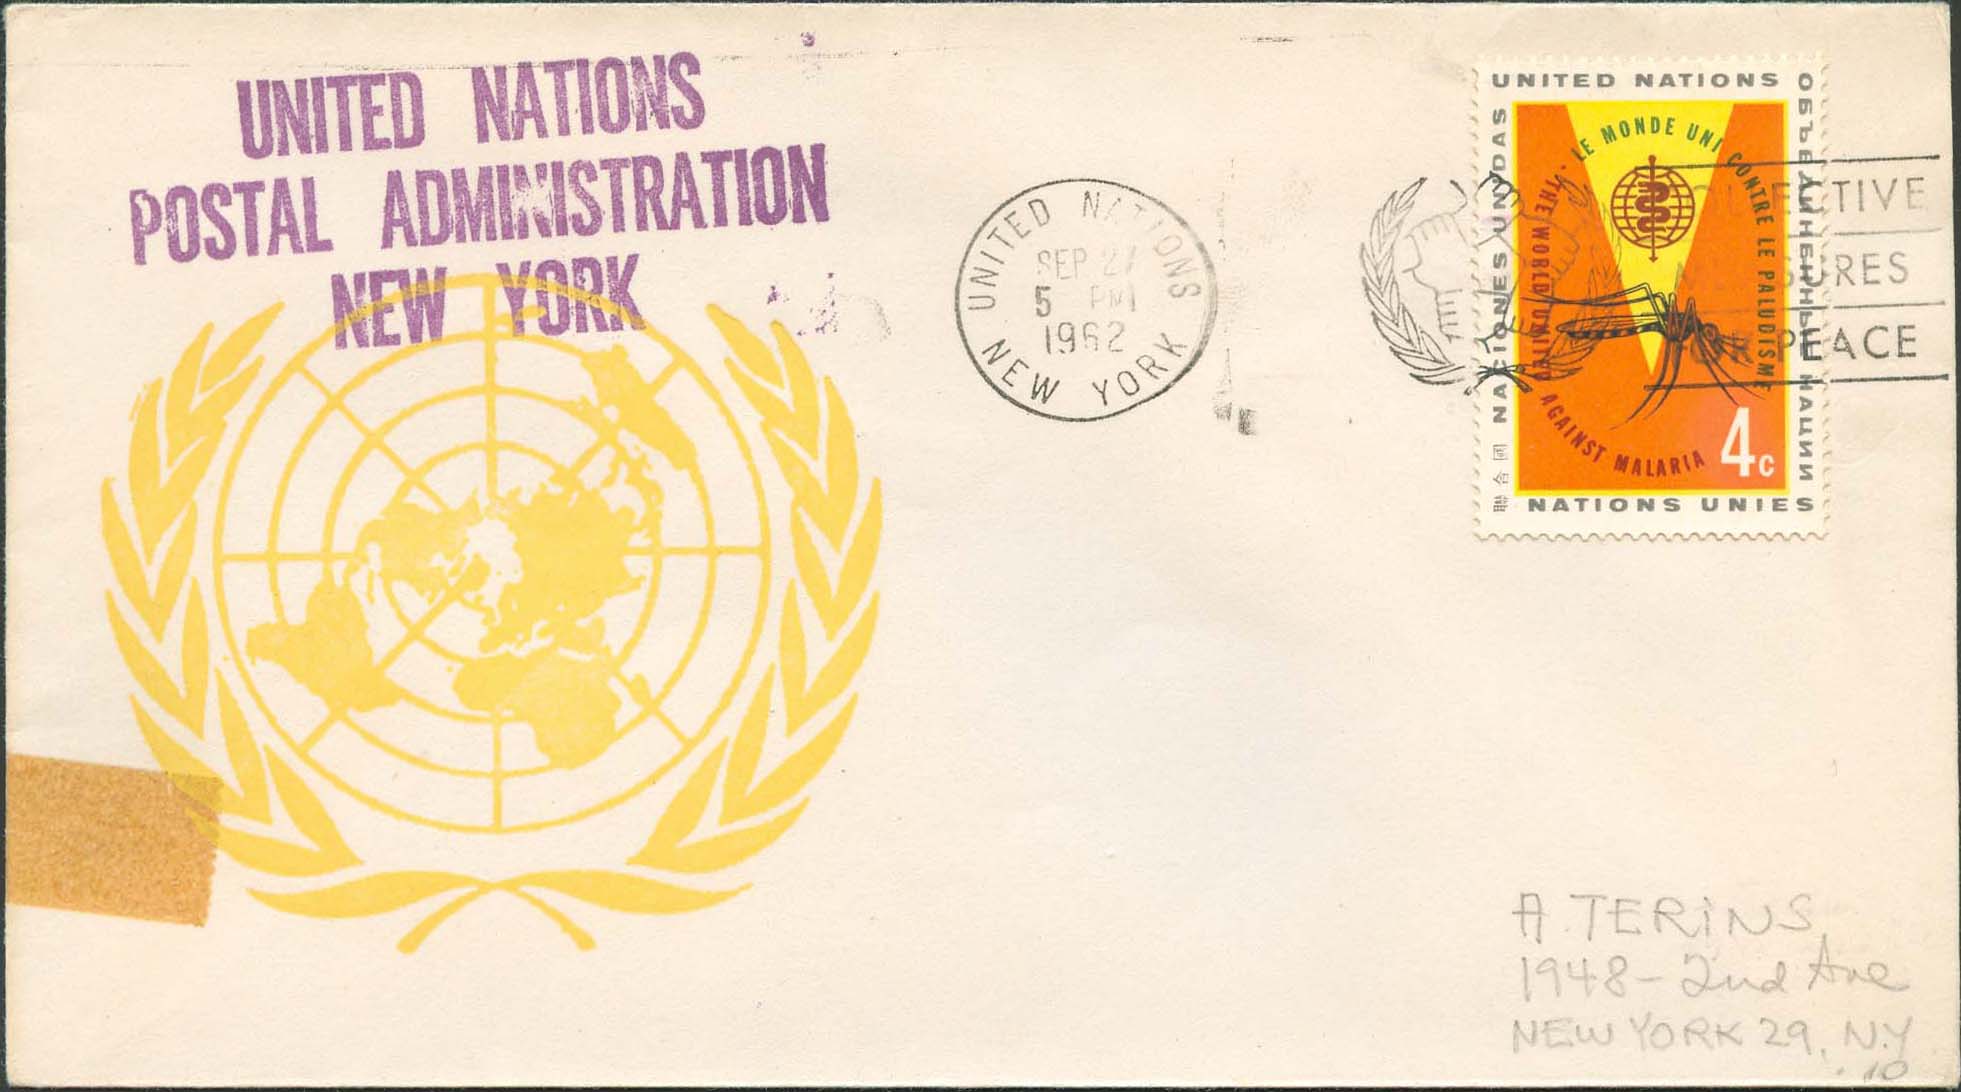 Scott 102 1st print - Sept 27, 1962 <br />Machine slogan cancel "Collective Measures for Peace"<br />UN Postal Administration rubber stamped return address